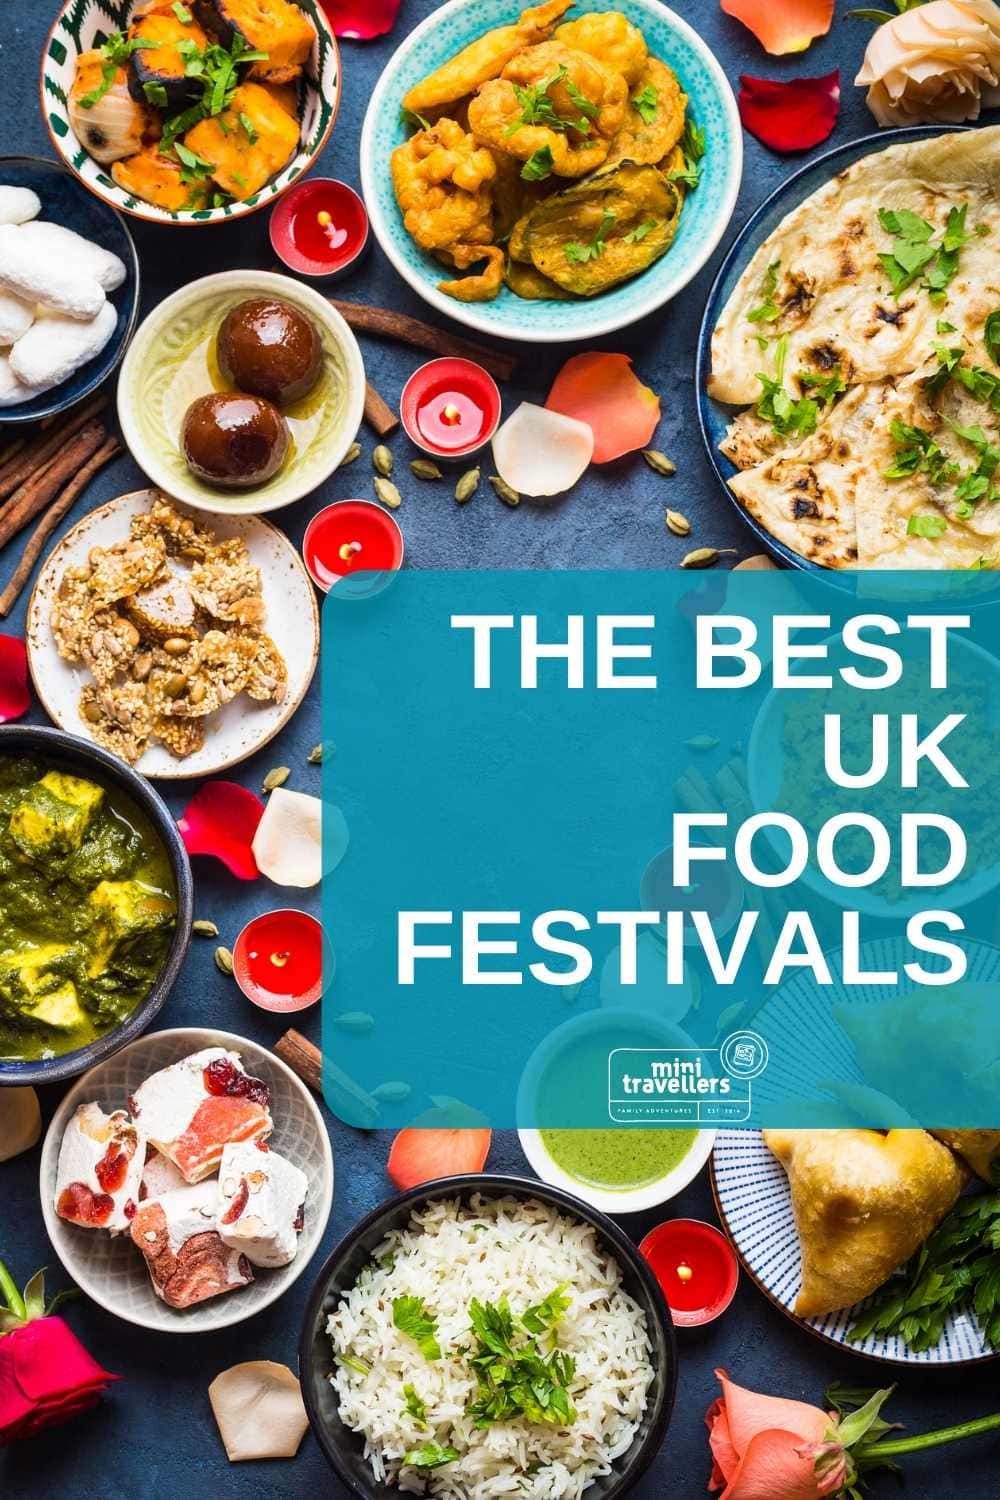 The best UK Food Festivals